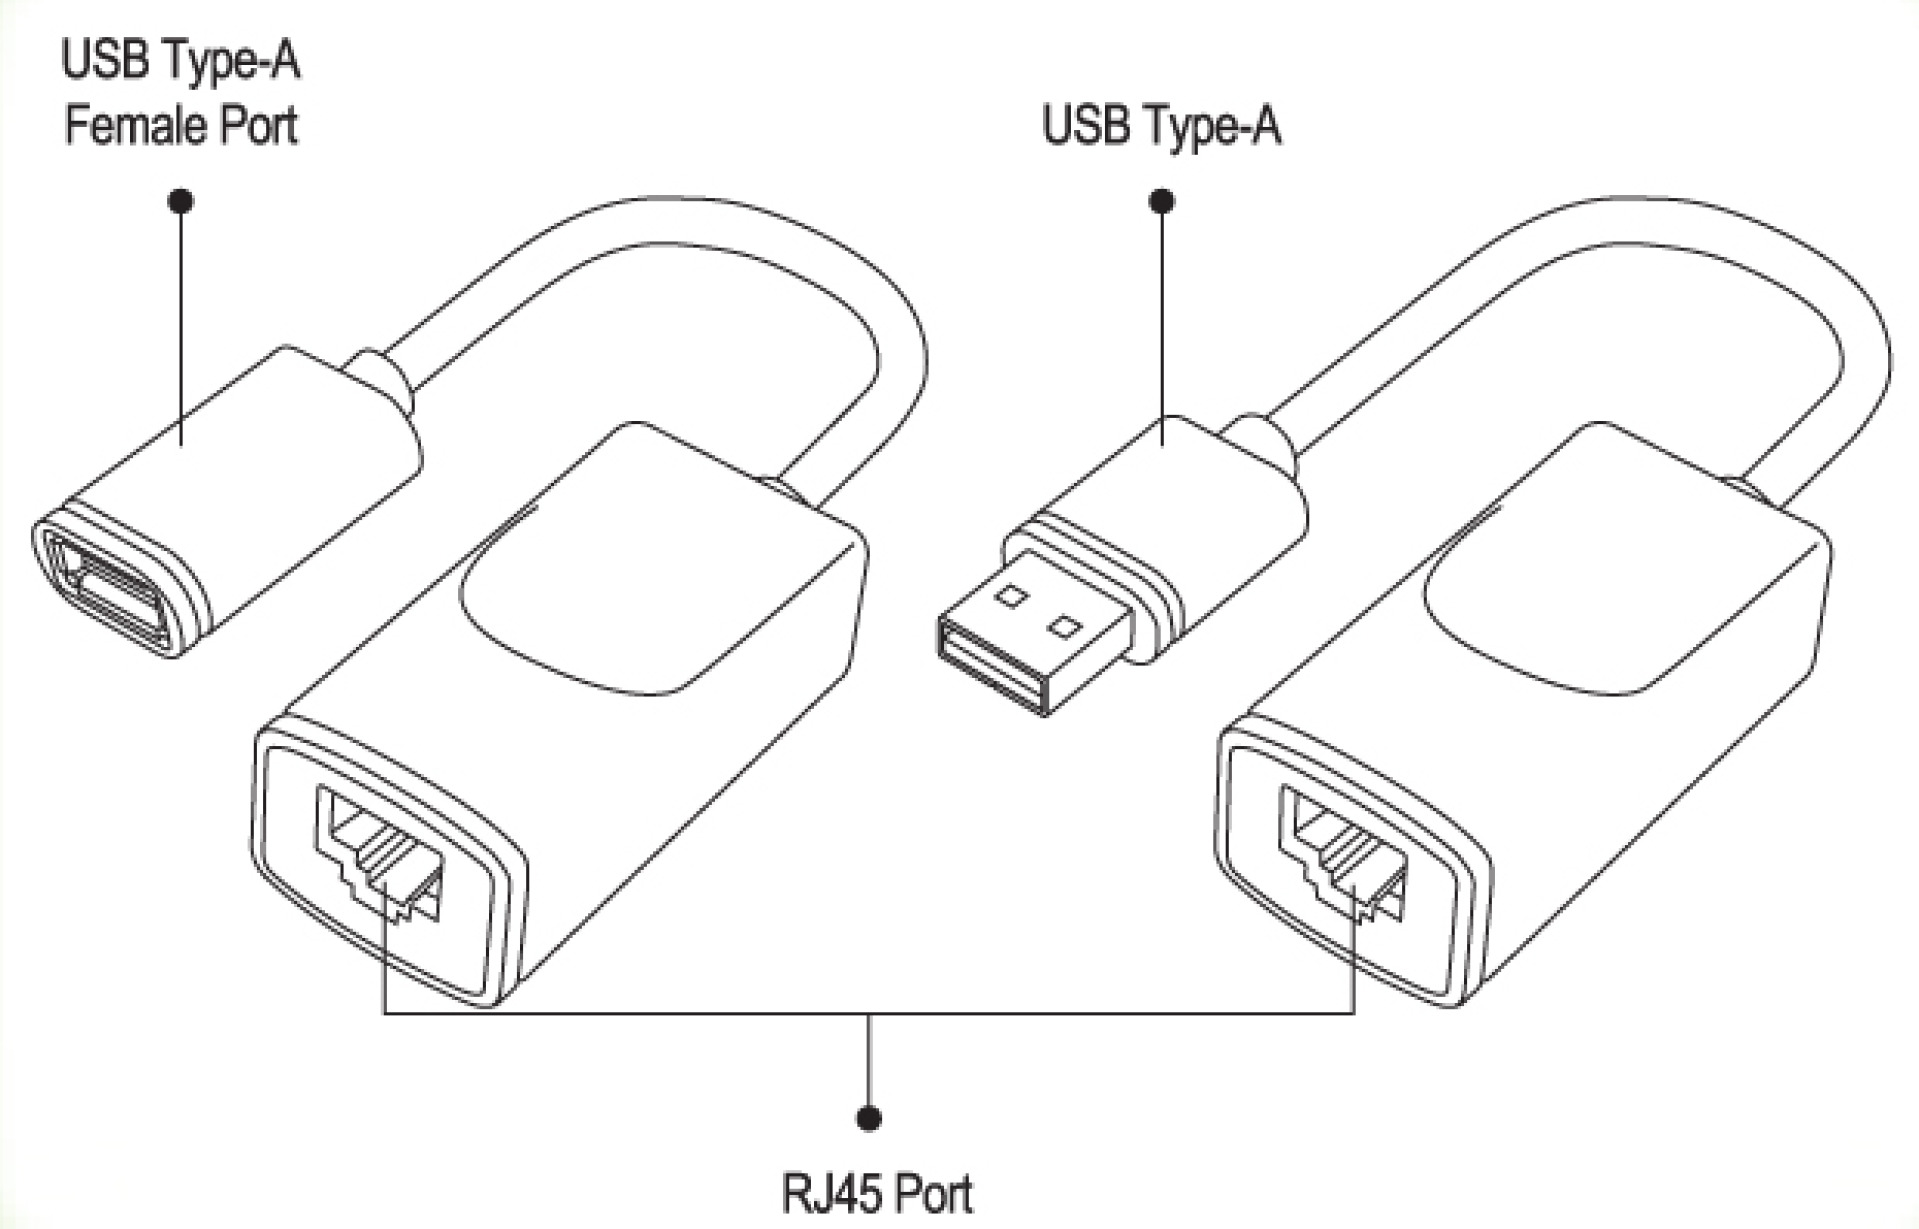 USB1.1 Extender bis 60m